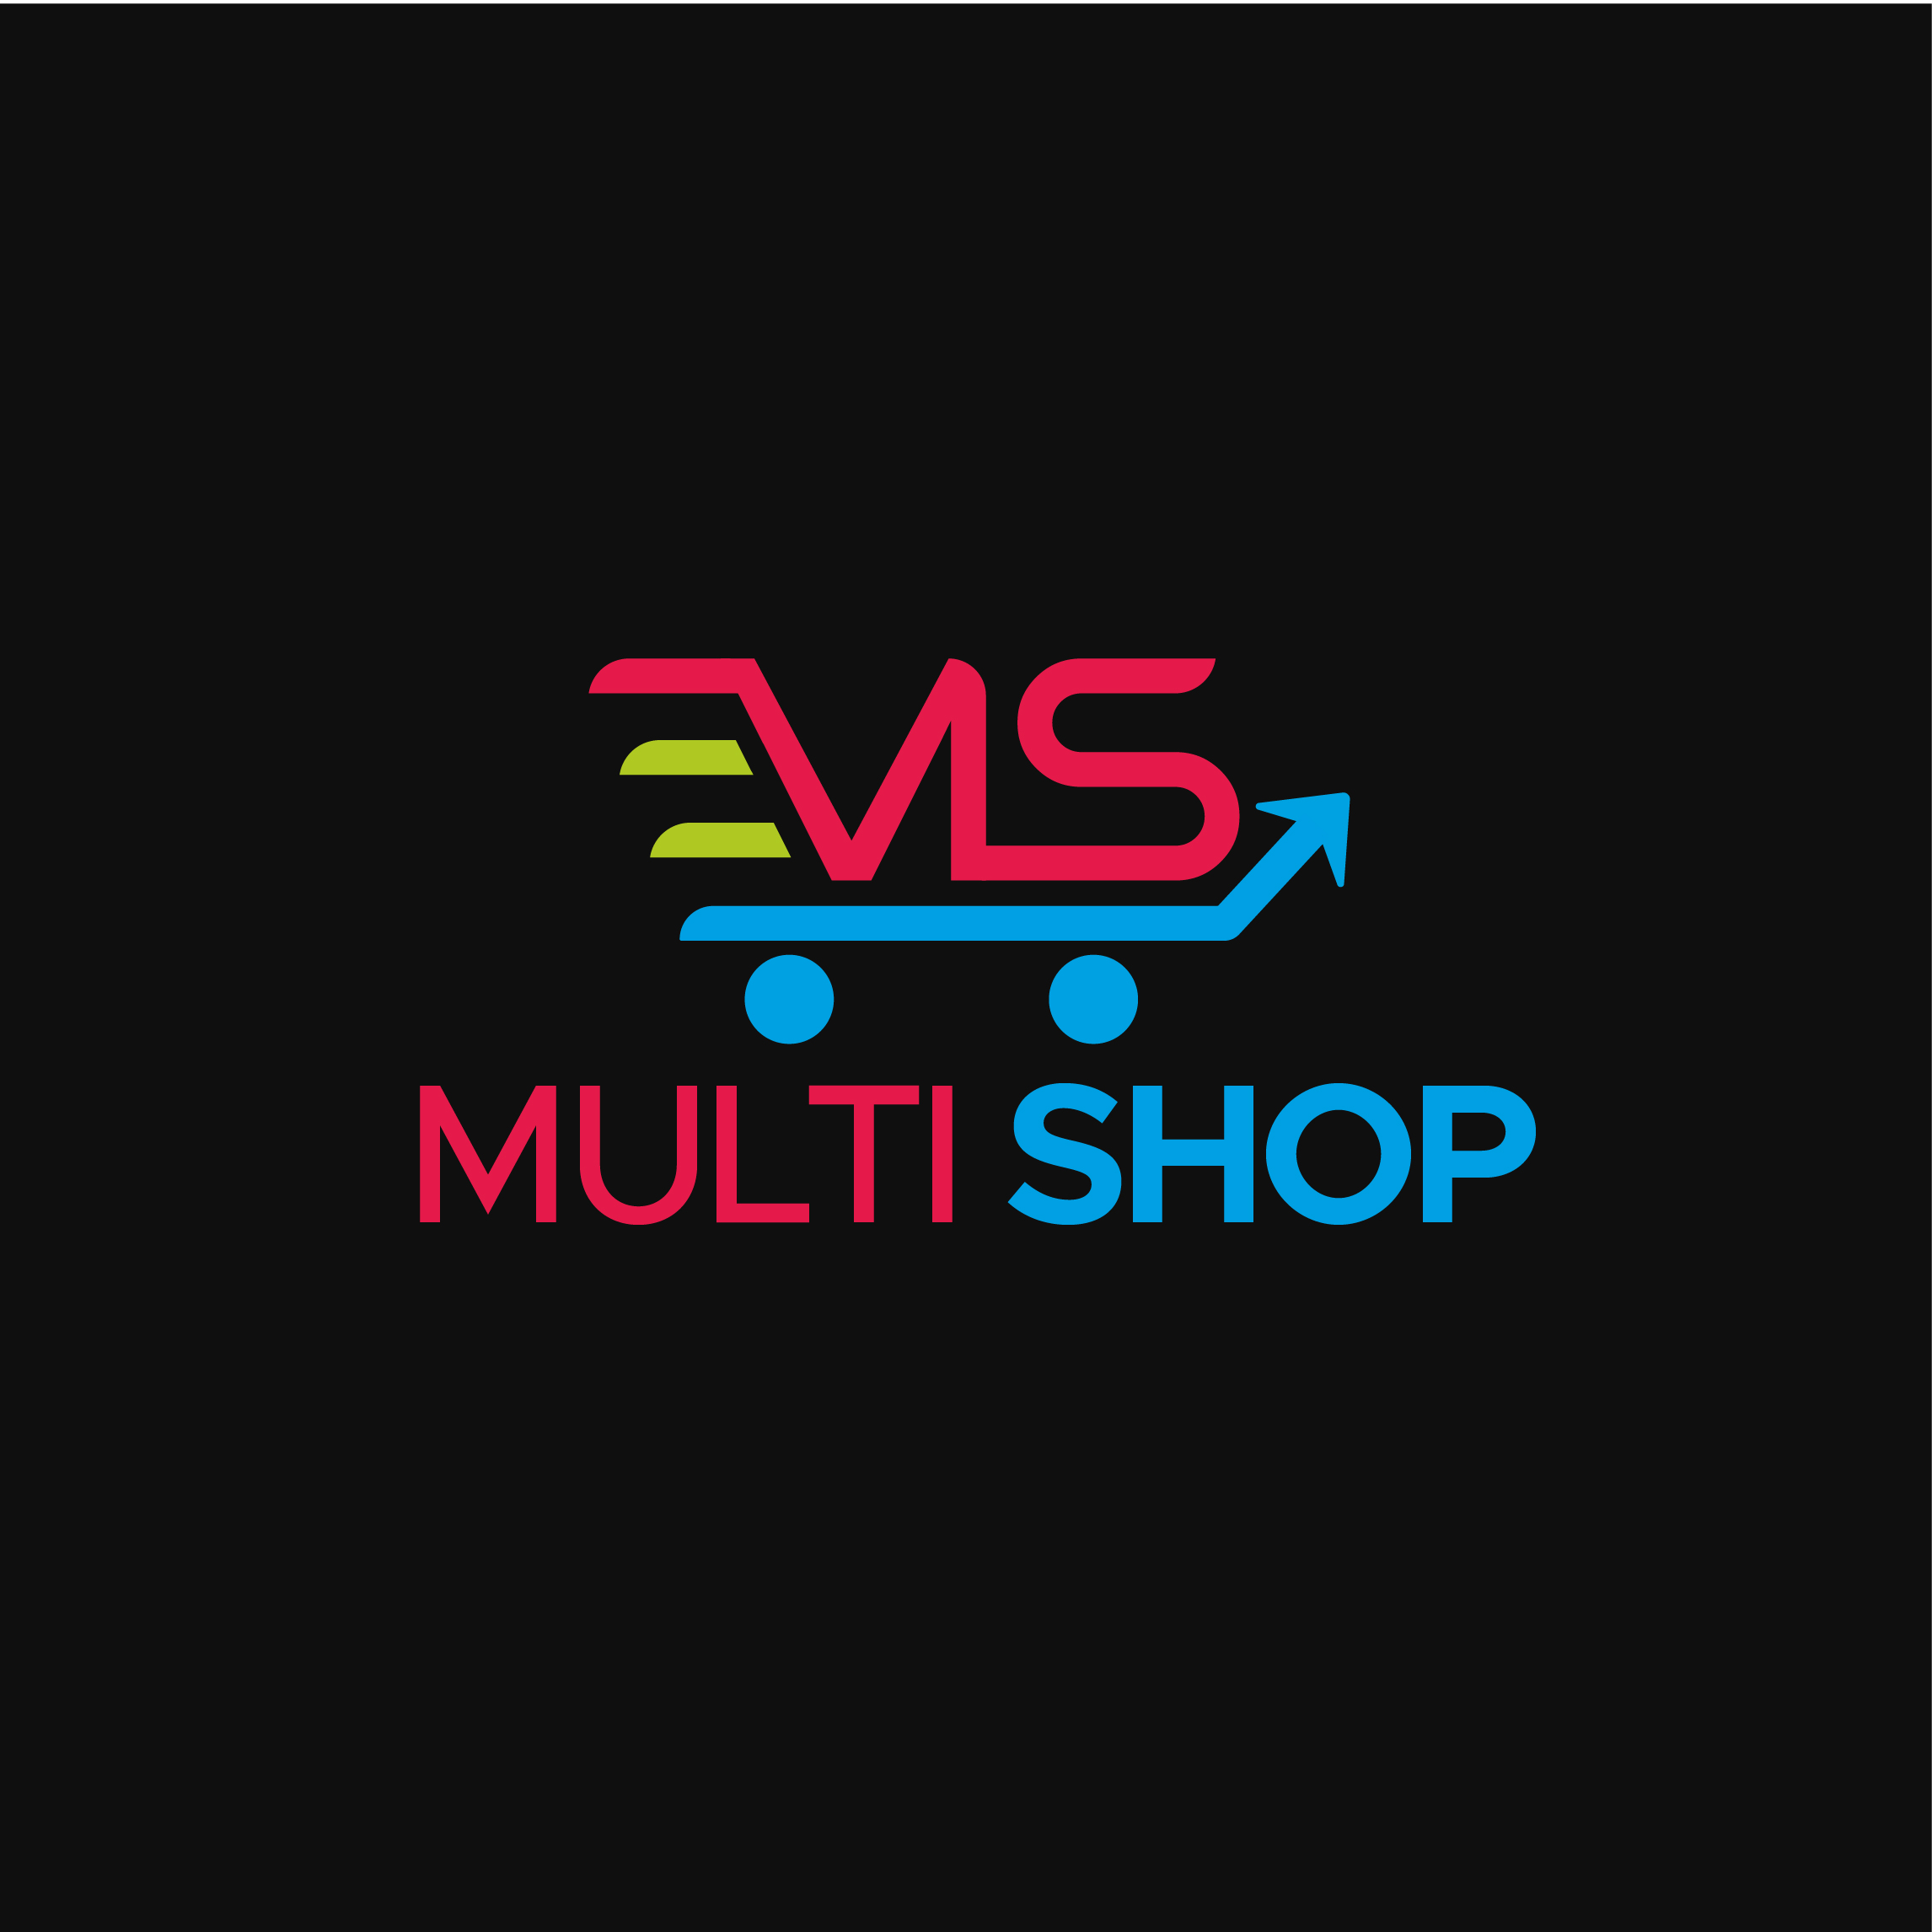 MS Letter logo design template cover image.